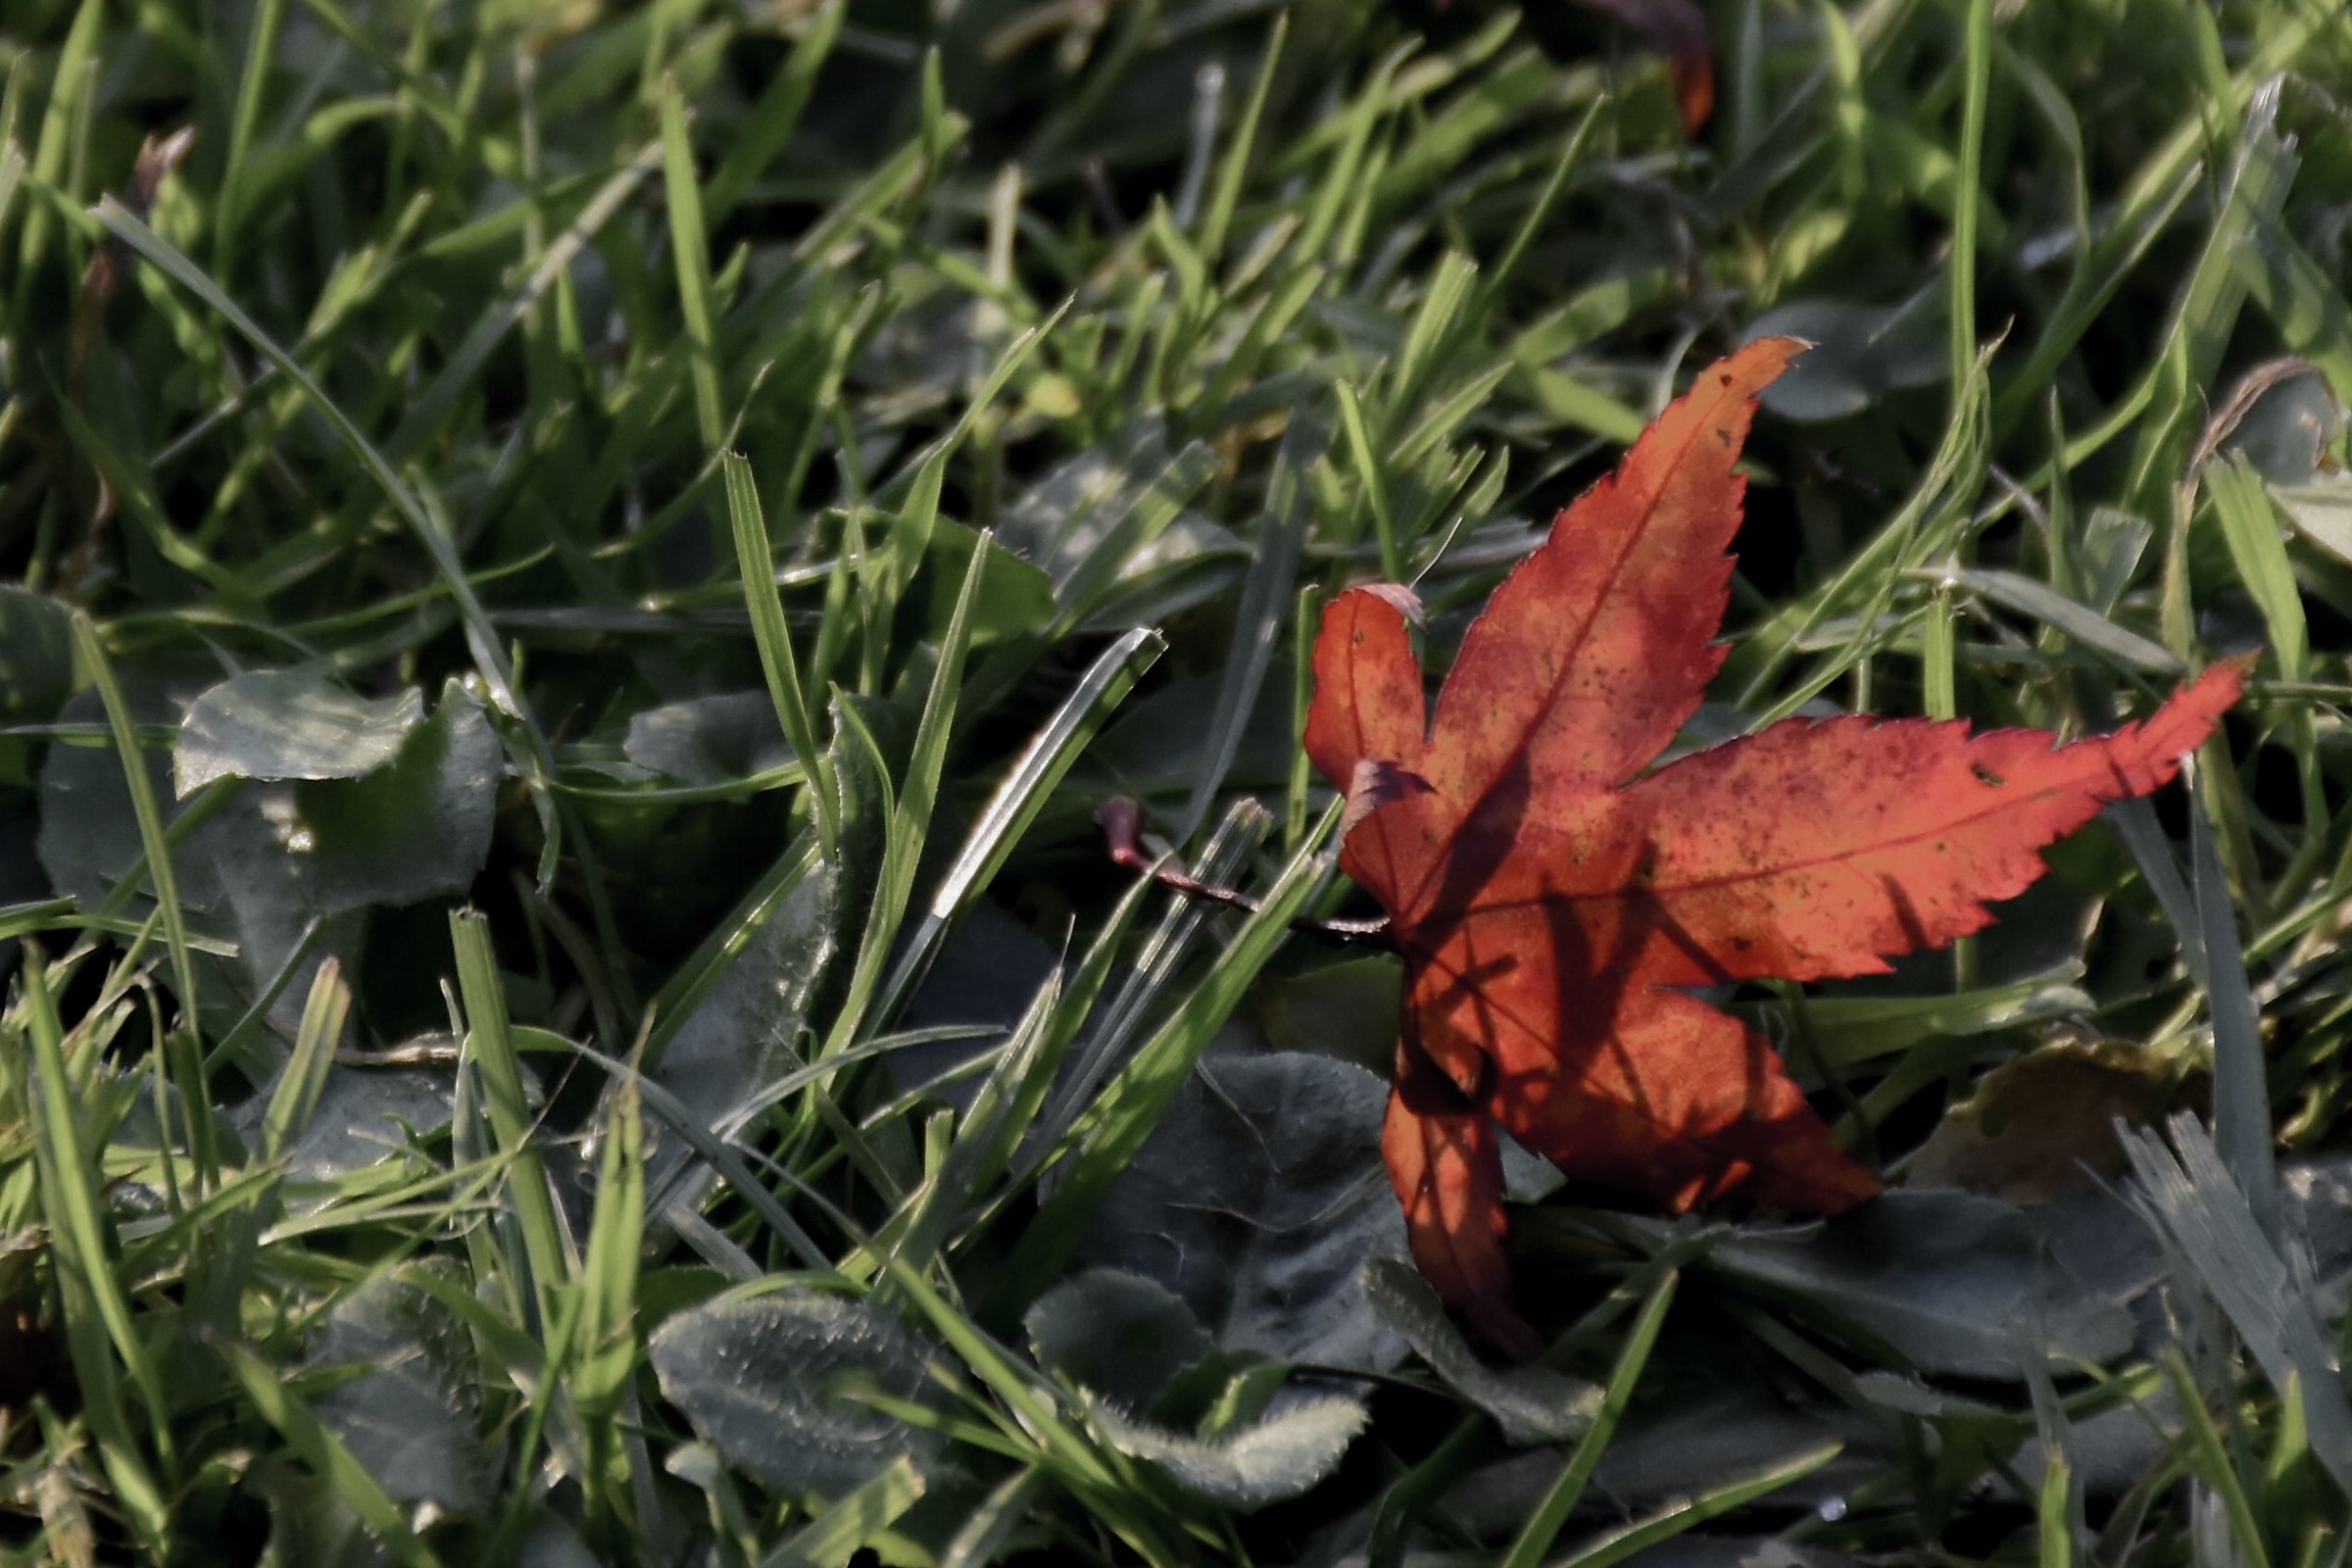 On the lawn, a leaf...